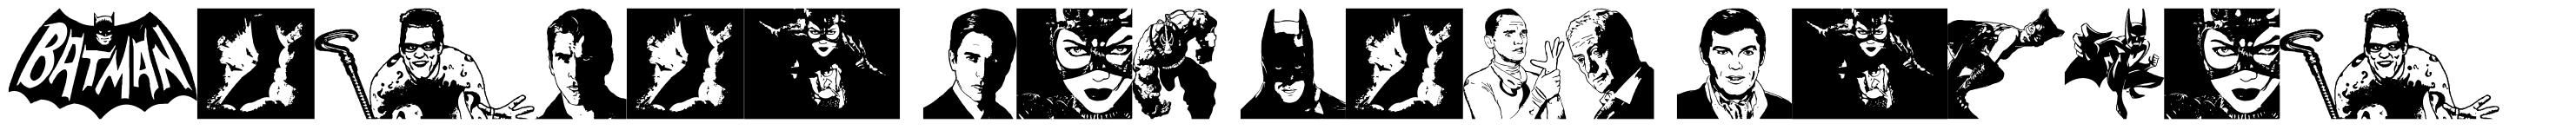 Batman The Dark Knight schriftart